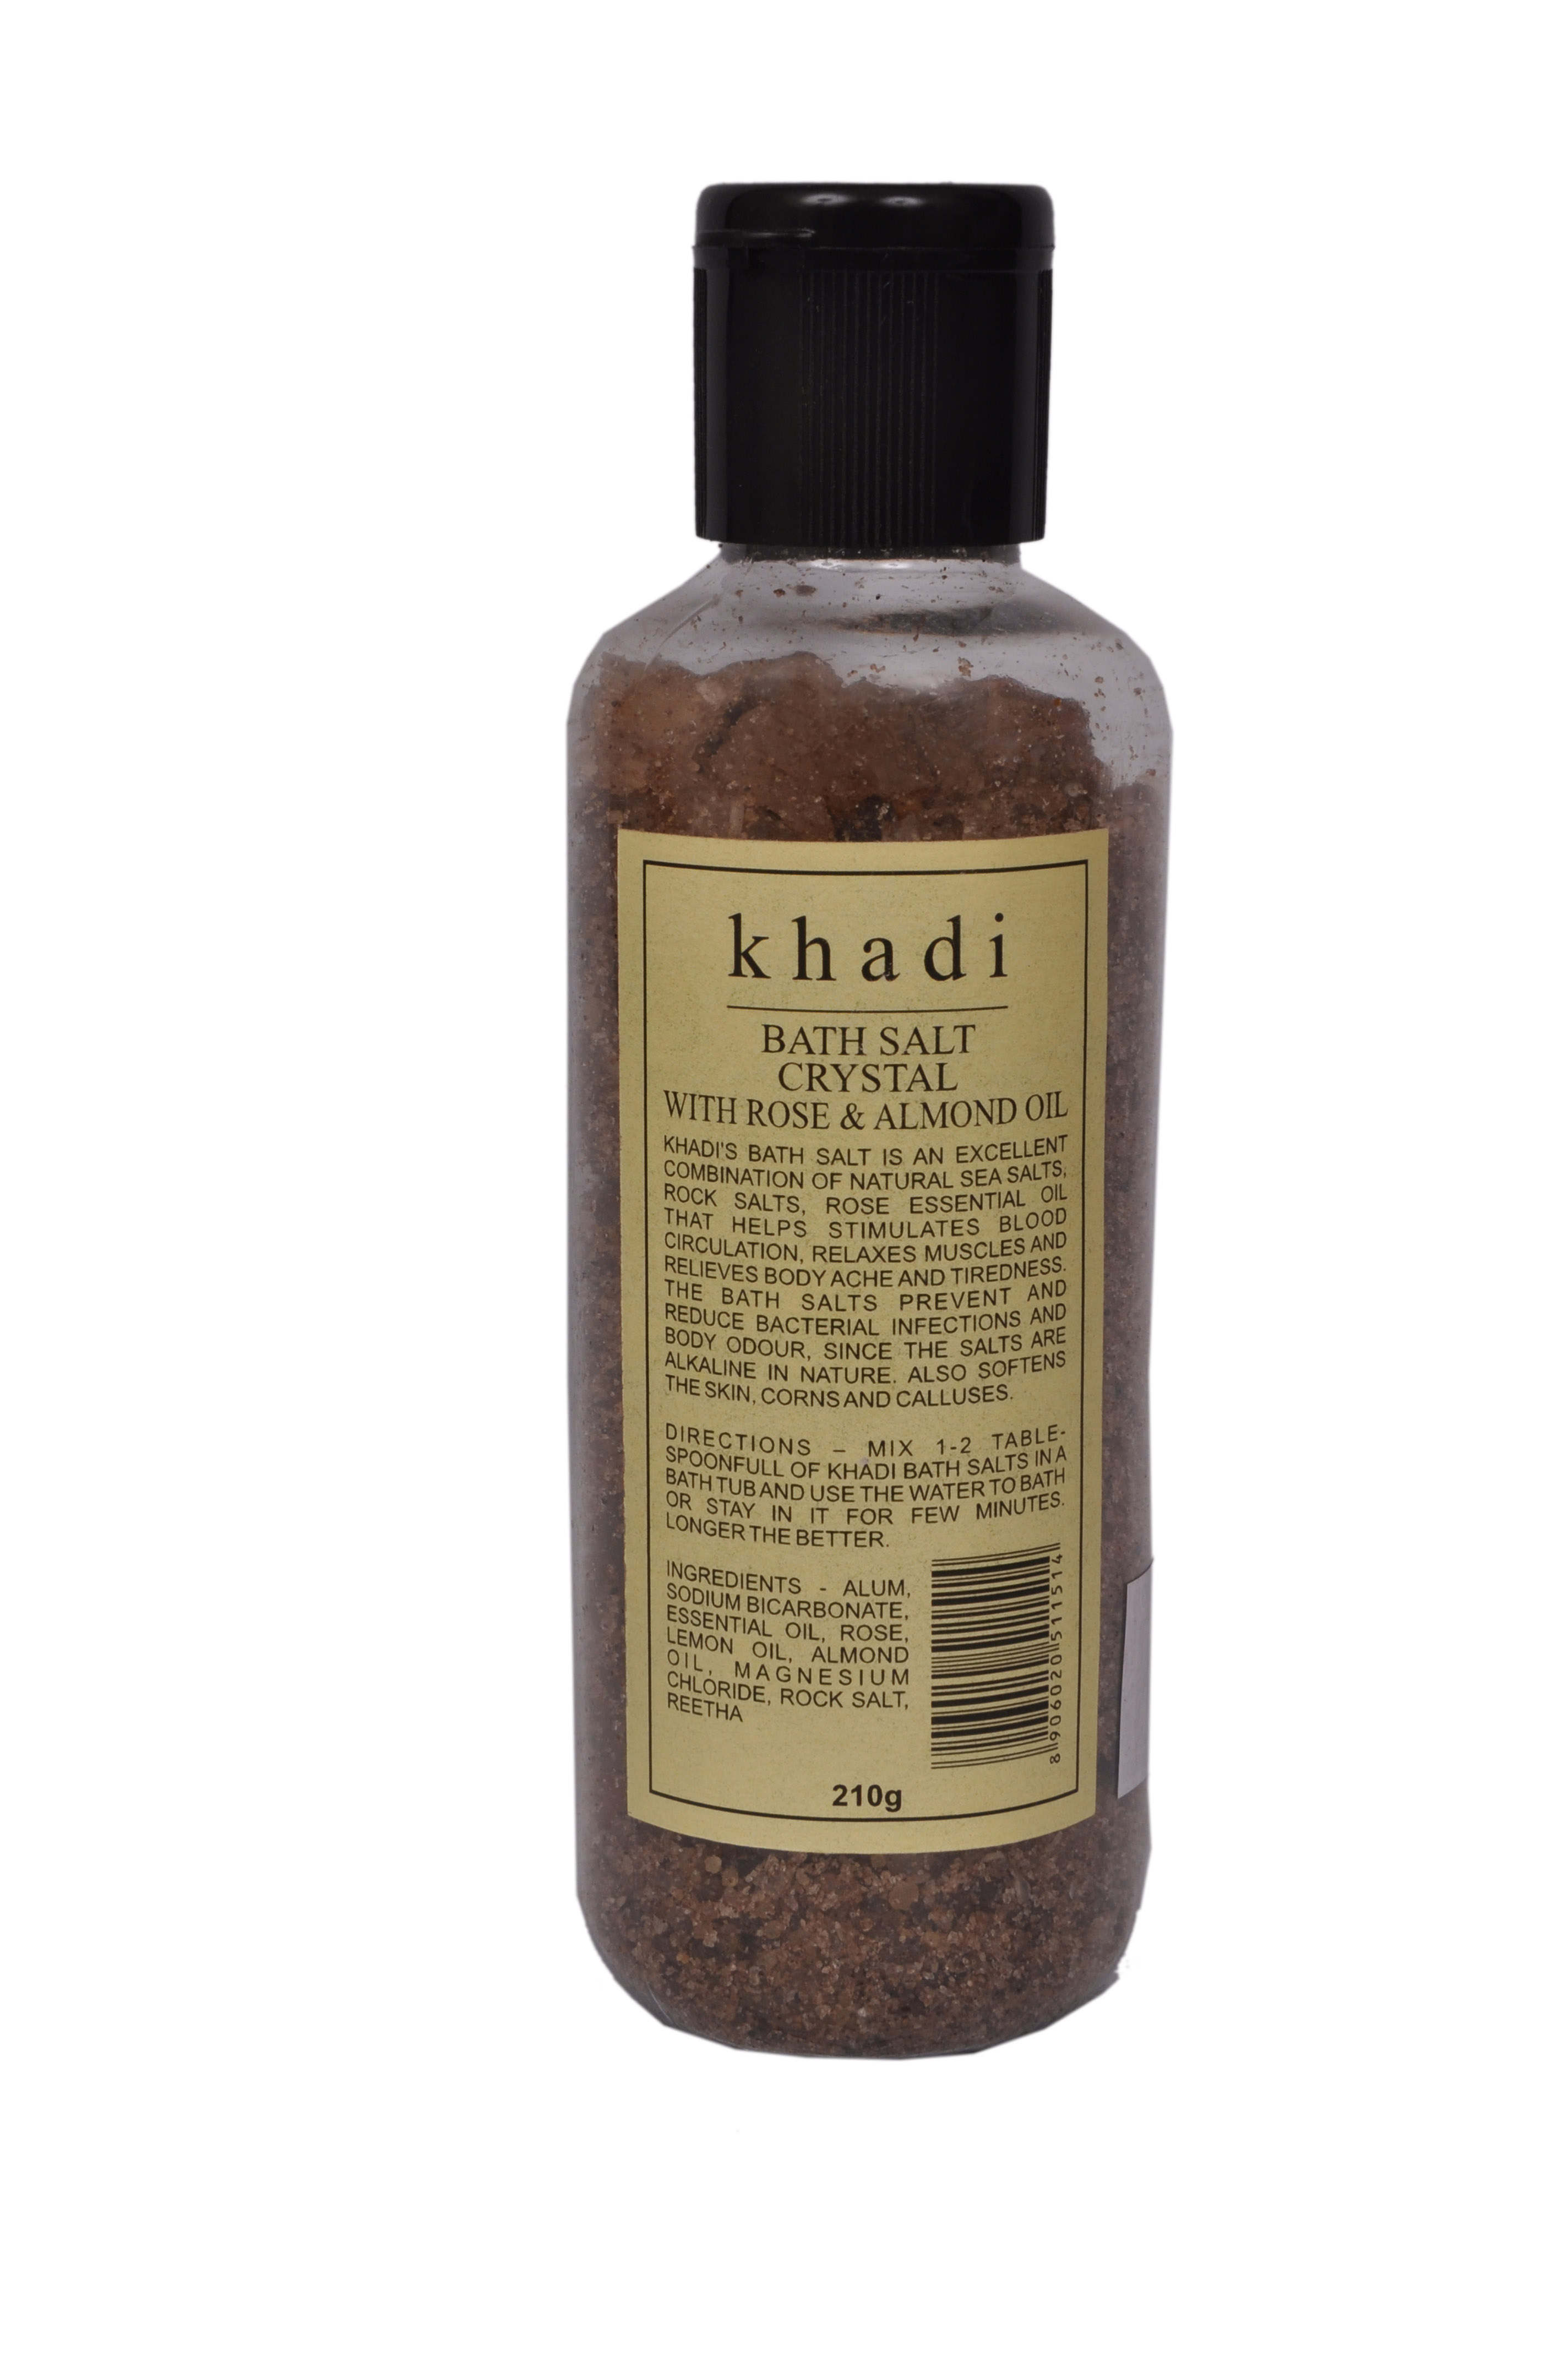 Buy Khadi Bath Salt Crystal with Rose & Almond Oil at Best Price Online